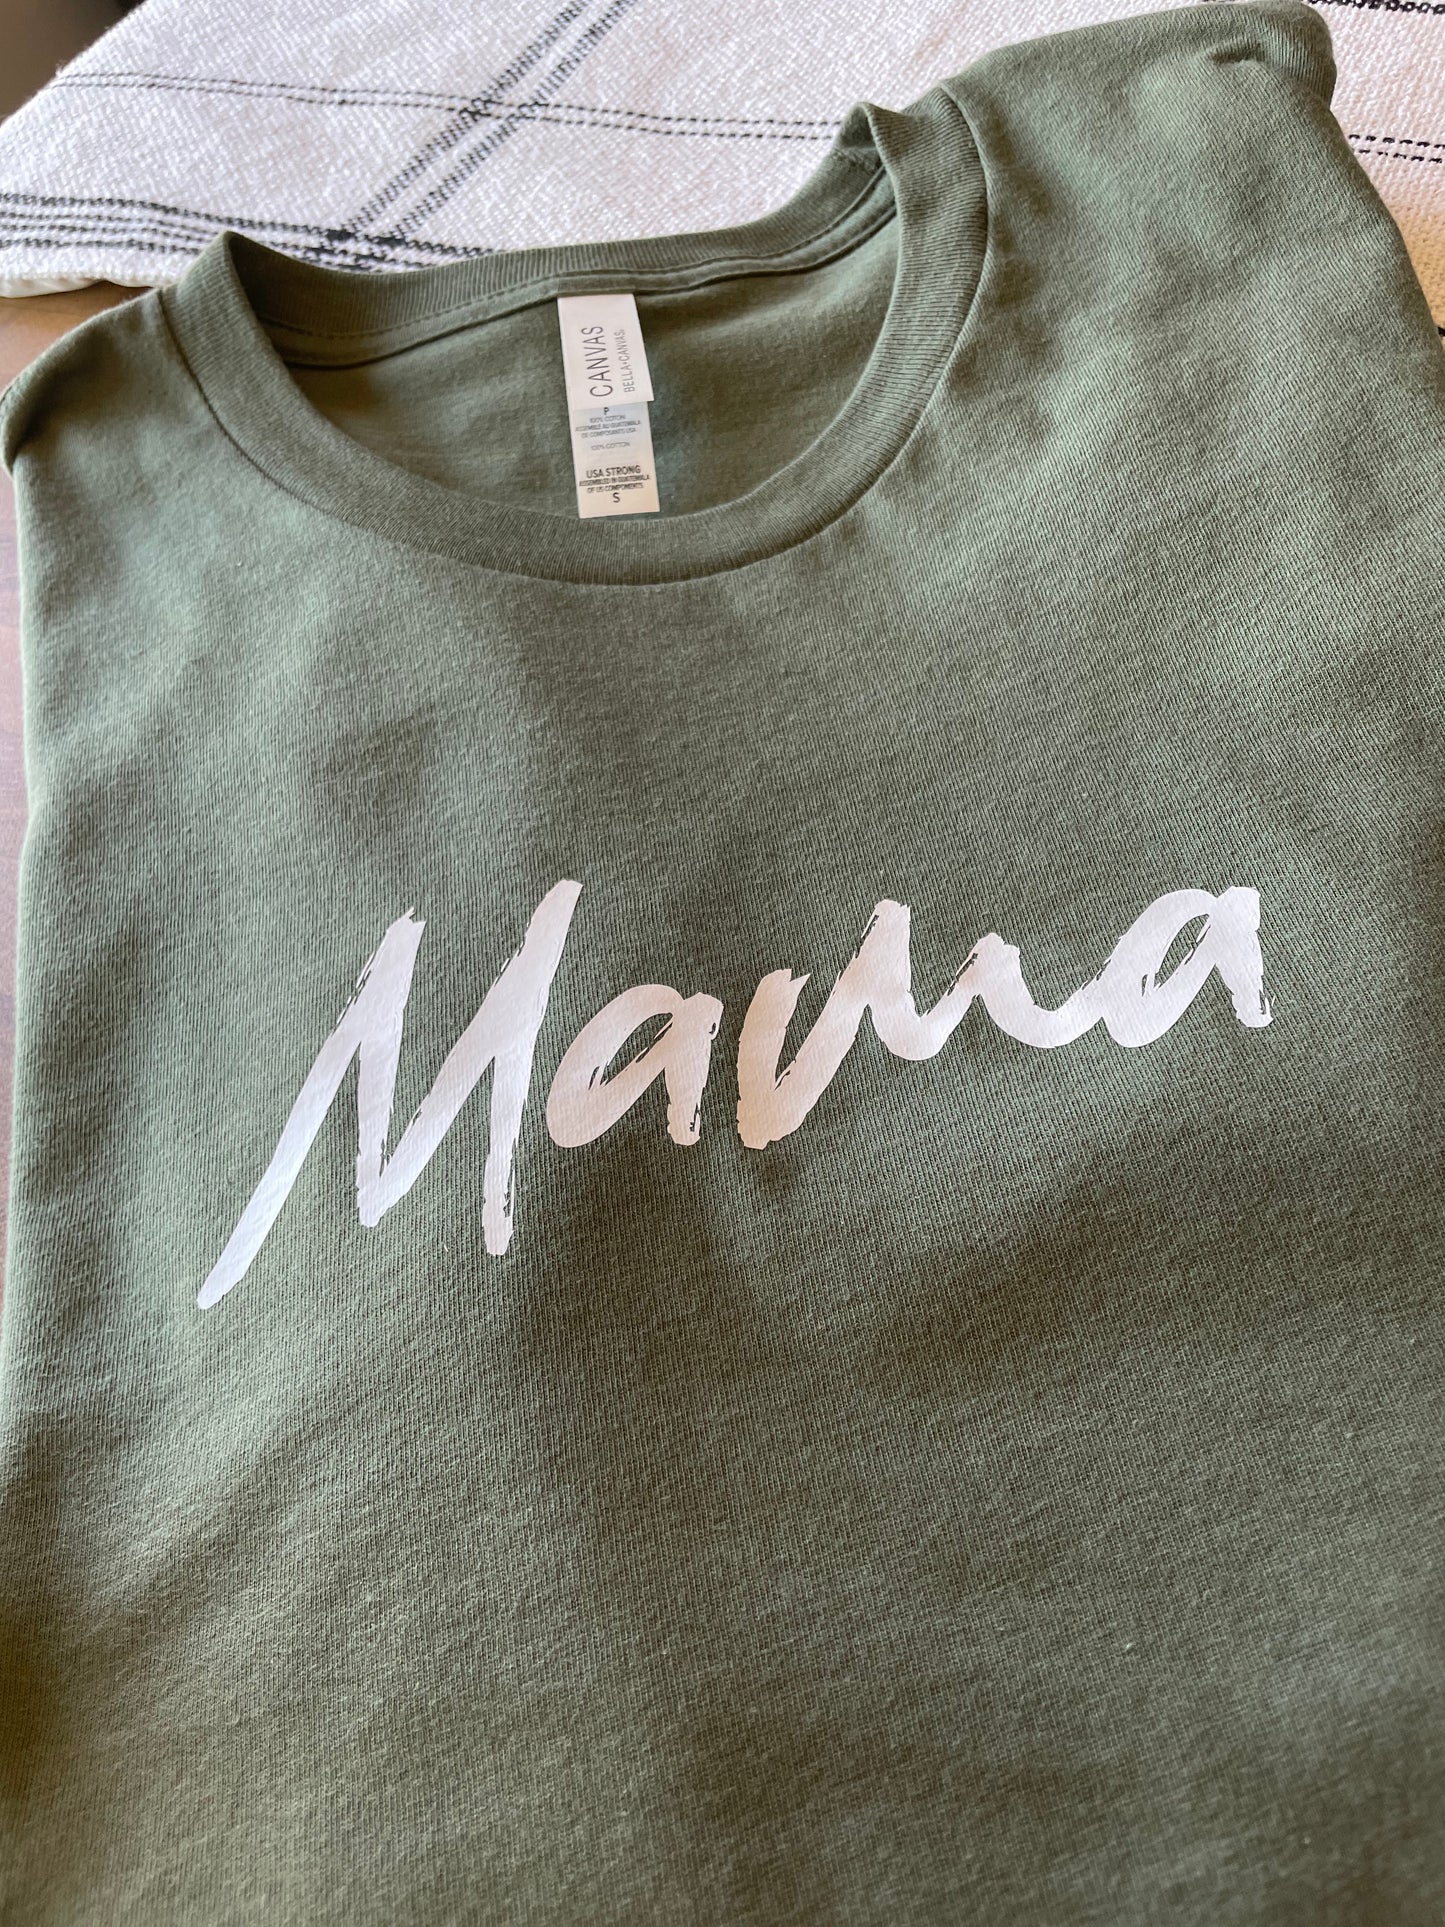 Mama - T-Shirt - folded - unclose detail view - stylized